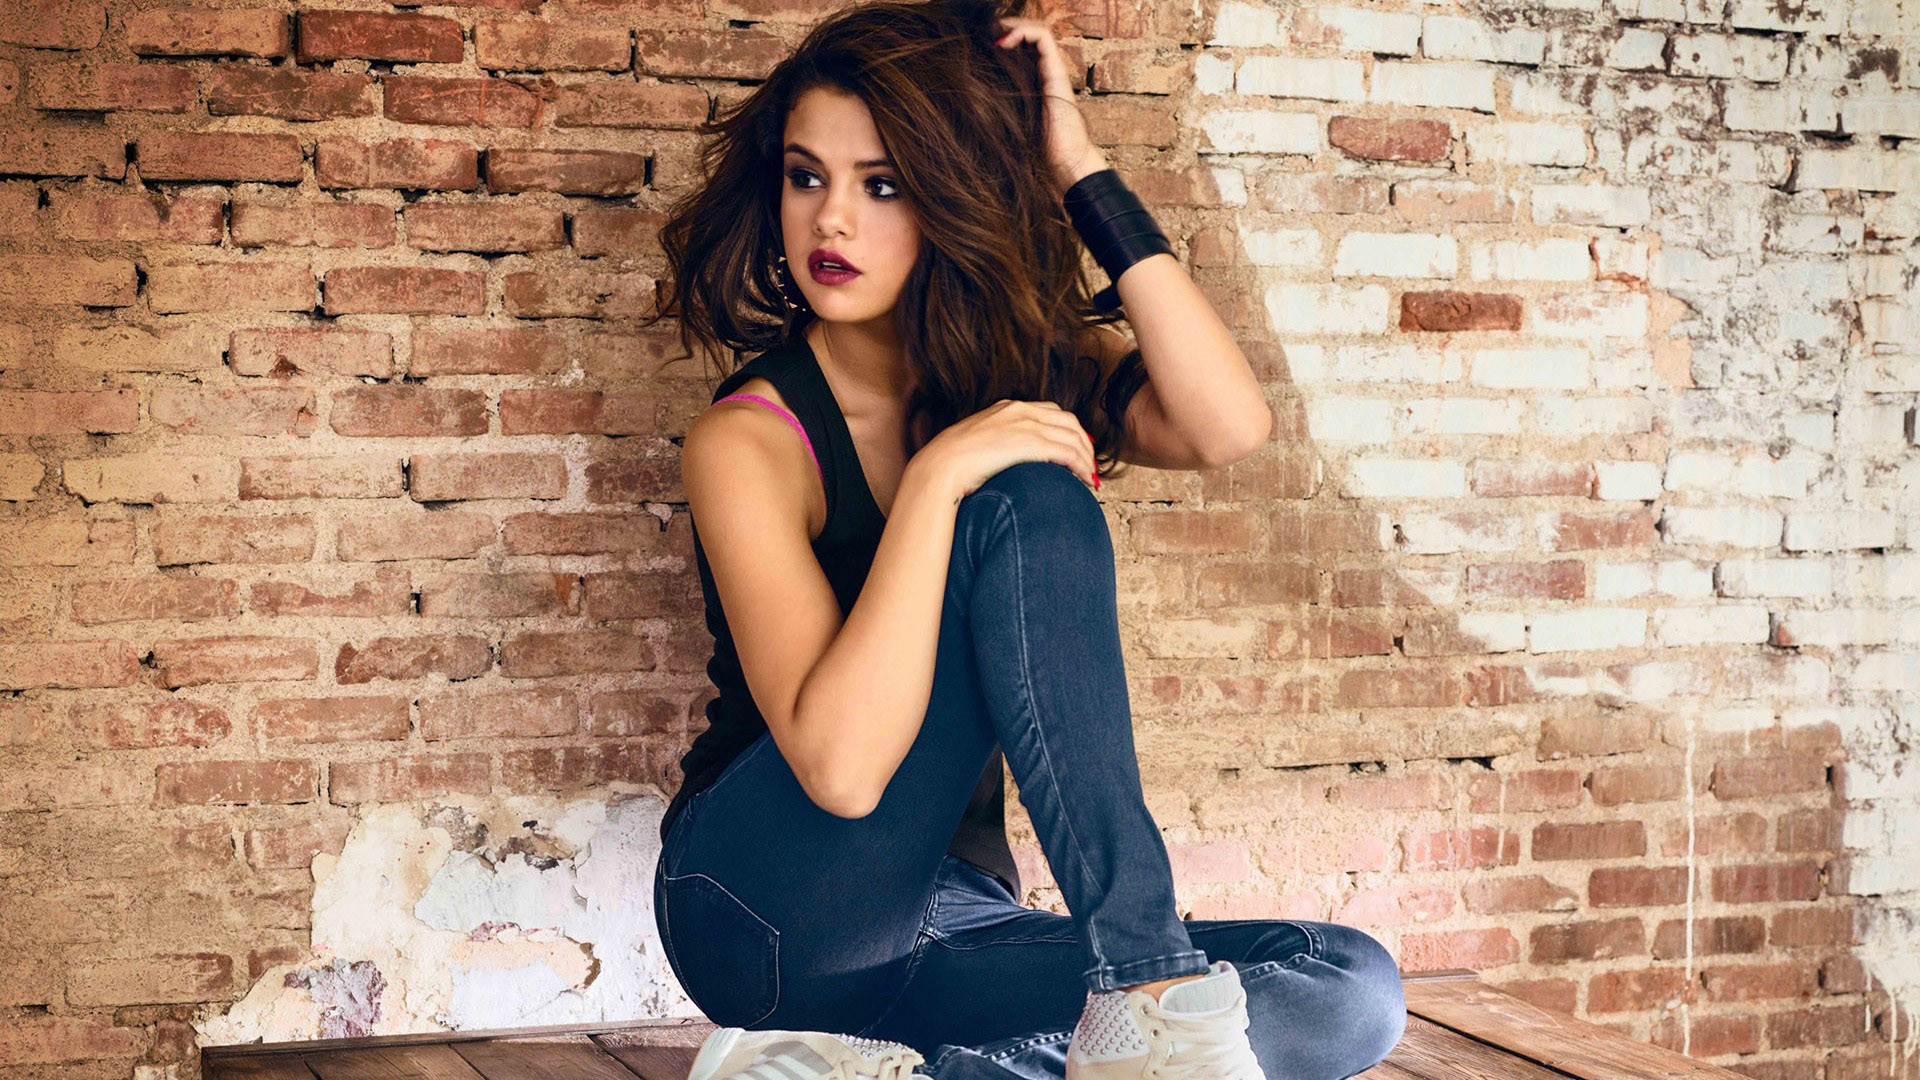 Best Selena Santana Images On Pinterest Selena Gomez